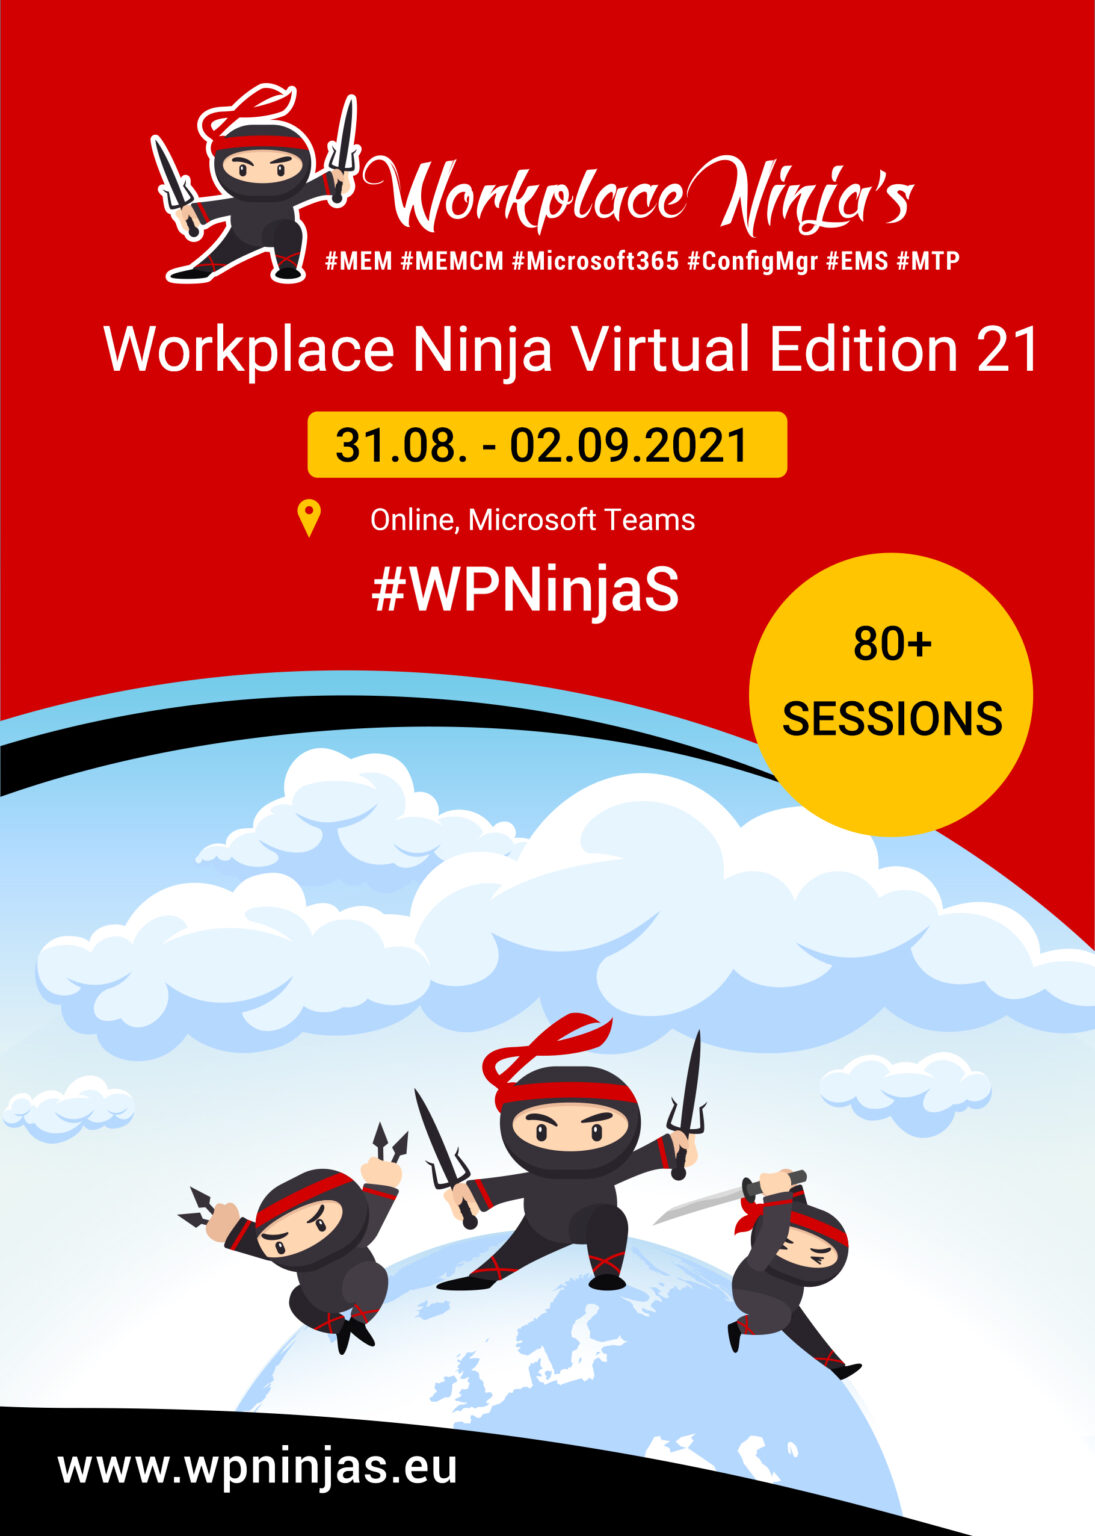 Workplace ninja event flyer